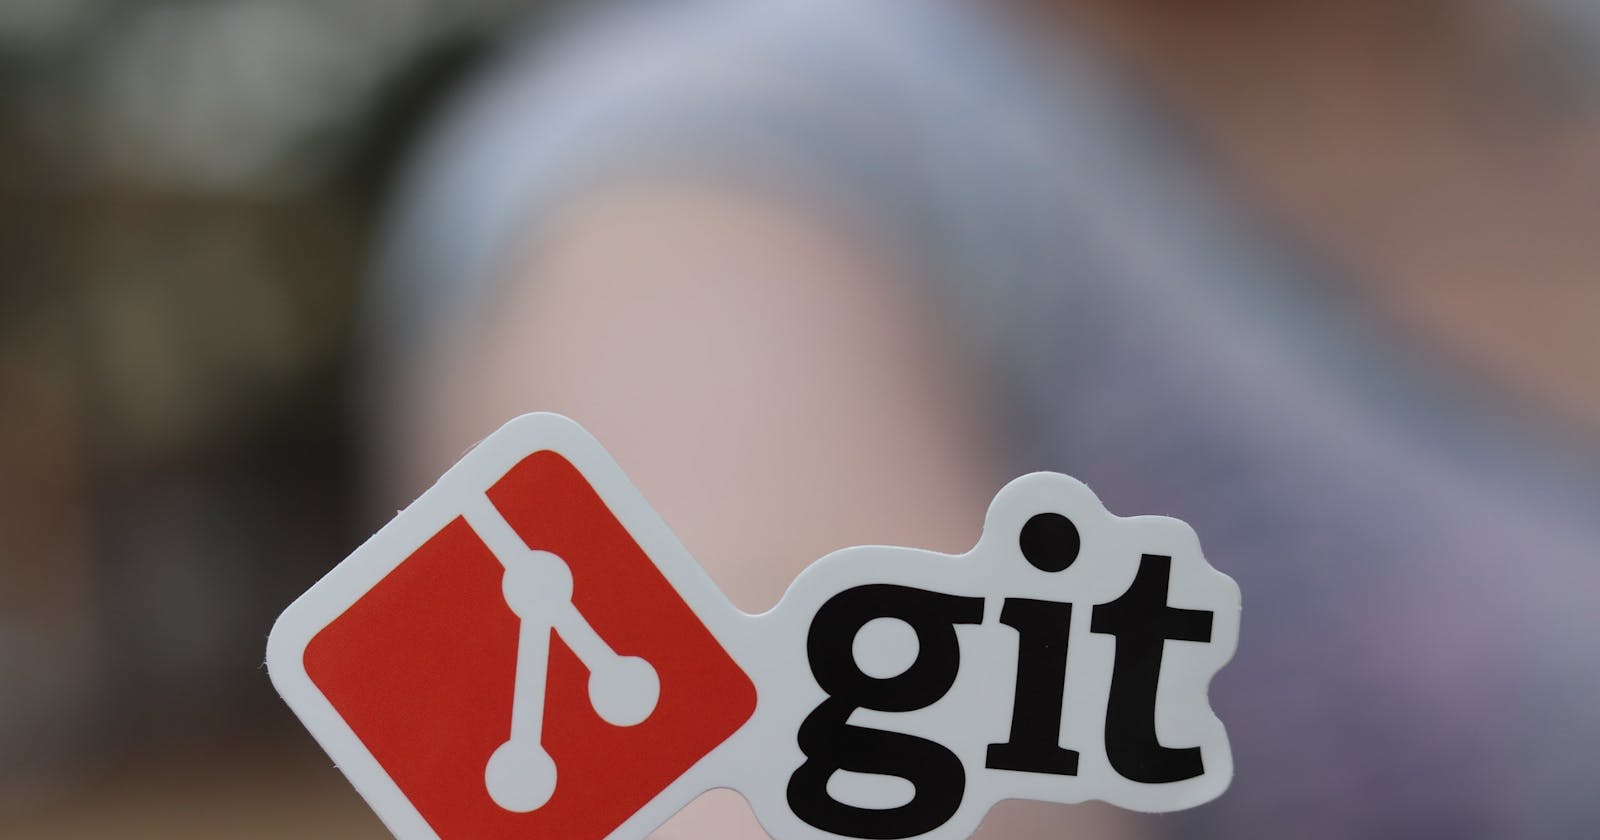 Why do we use Git?